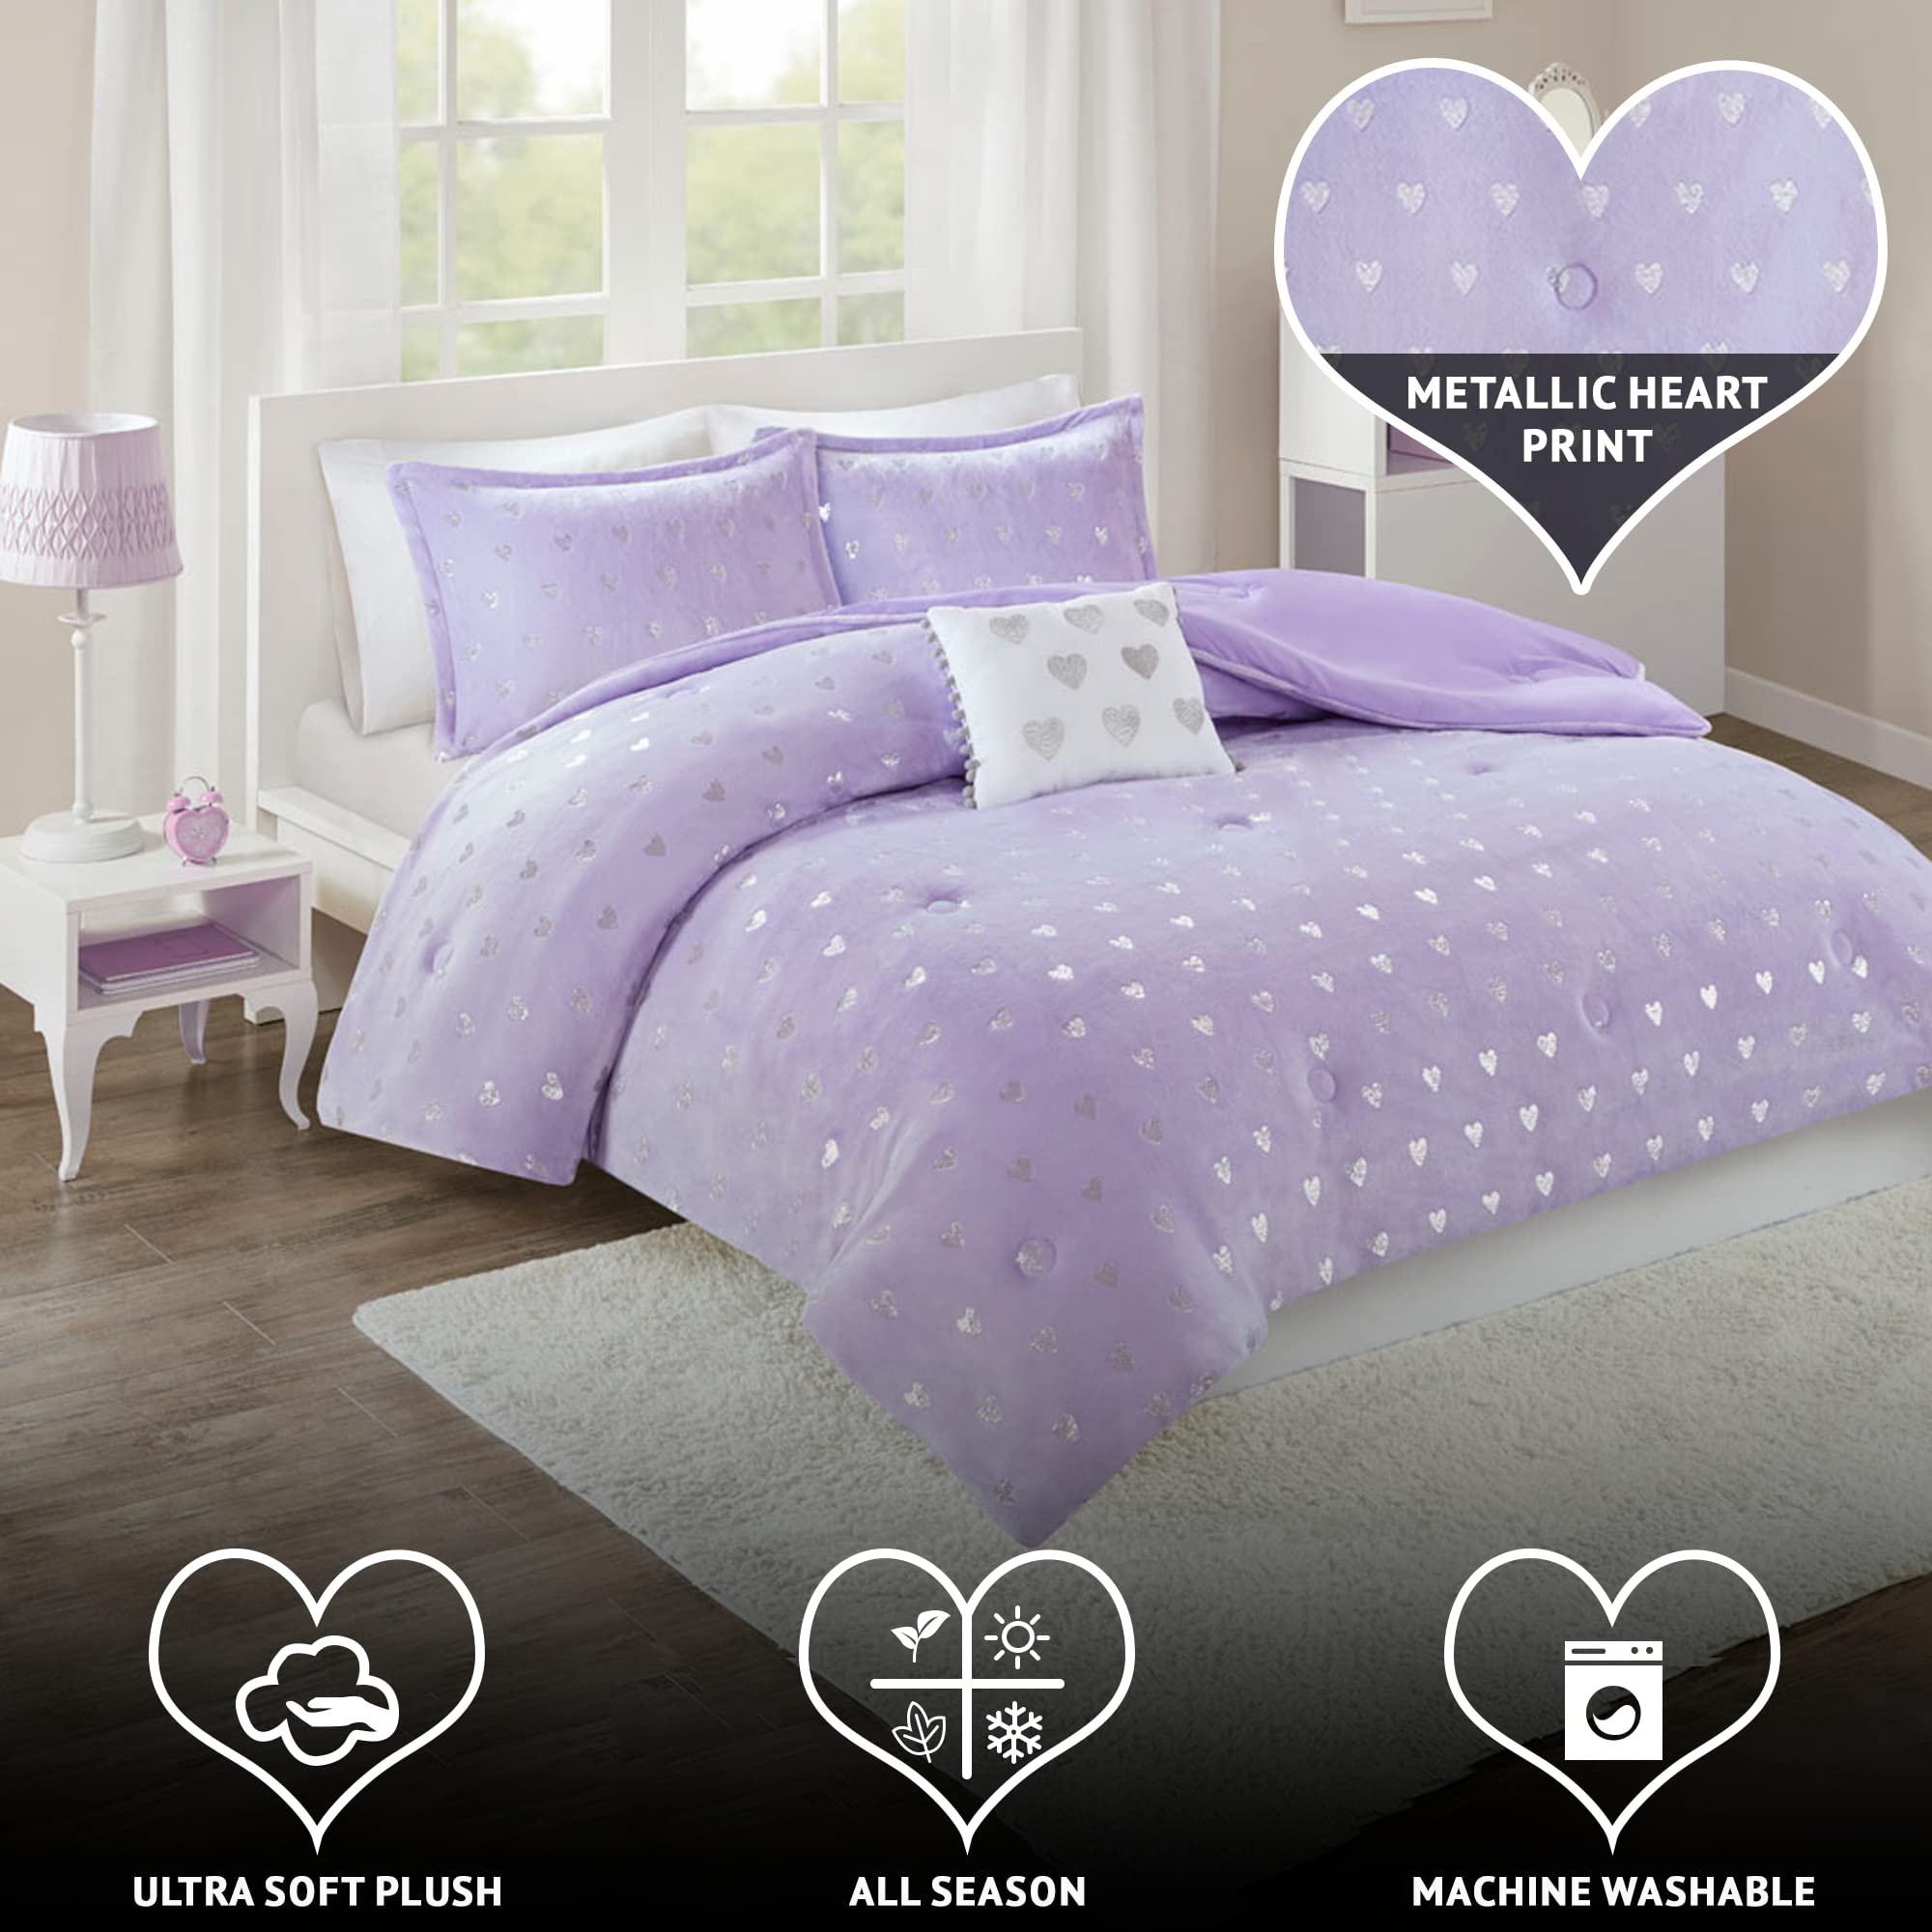 Mi Zone Rosalie Comforter Ultra-Soft Microlight Plush Metallic Printed Hearts Brushed Reverse Overfilled Down Alternative Hypoallergenic All Season Bedding-Set, Full/Queen, Purple/Silver, 4 Piece